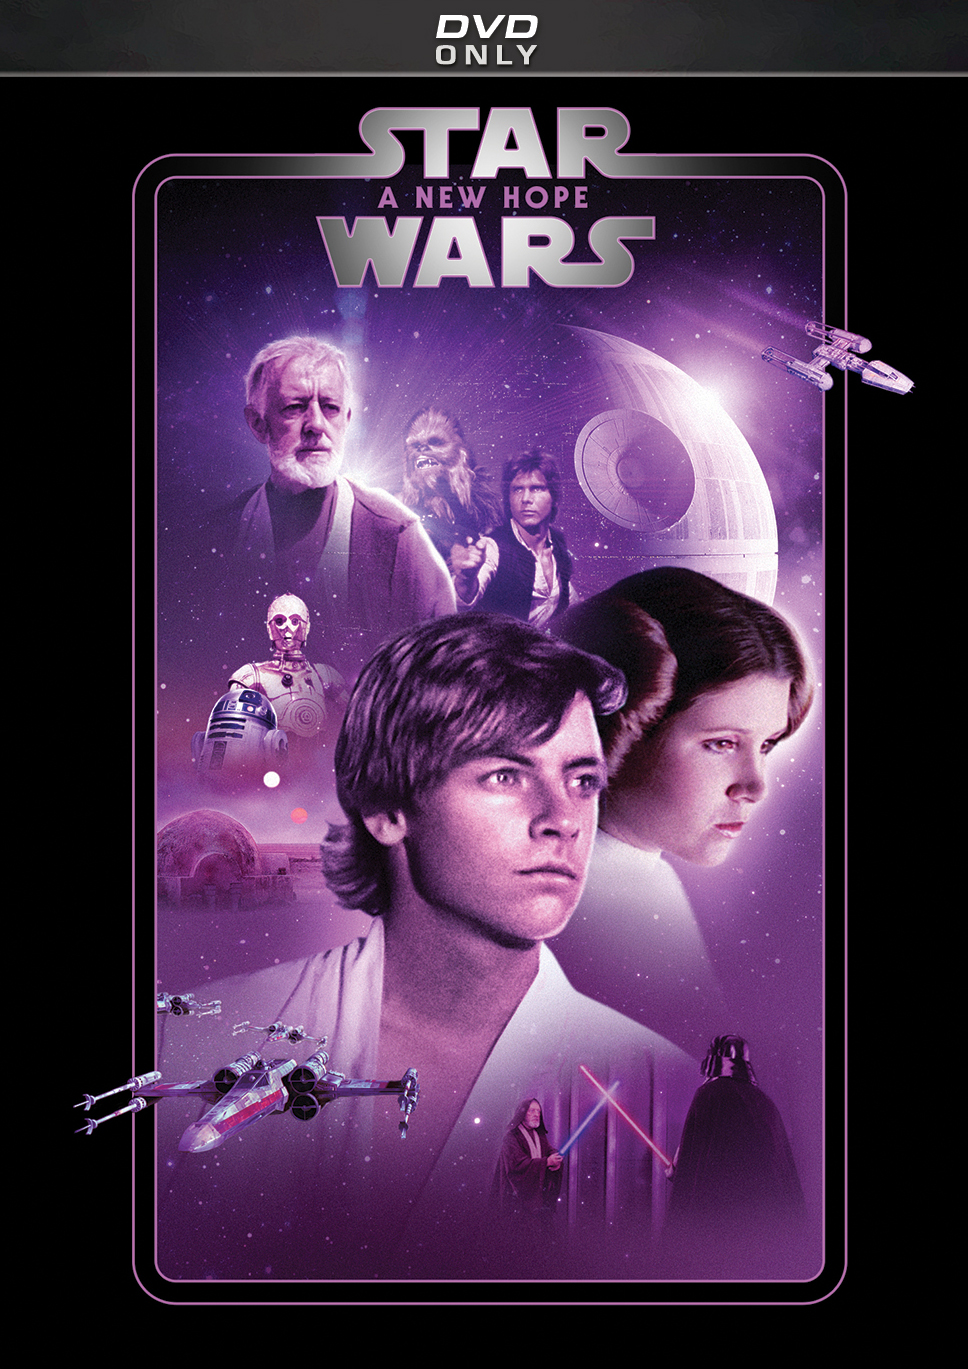 Star Wars: A New Hope [DVD] [1977] - Best Buy